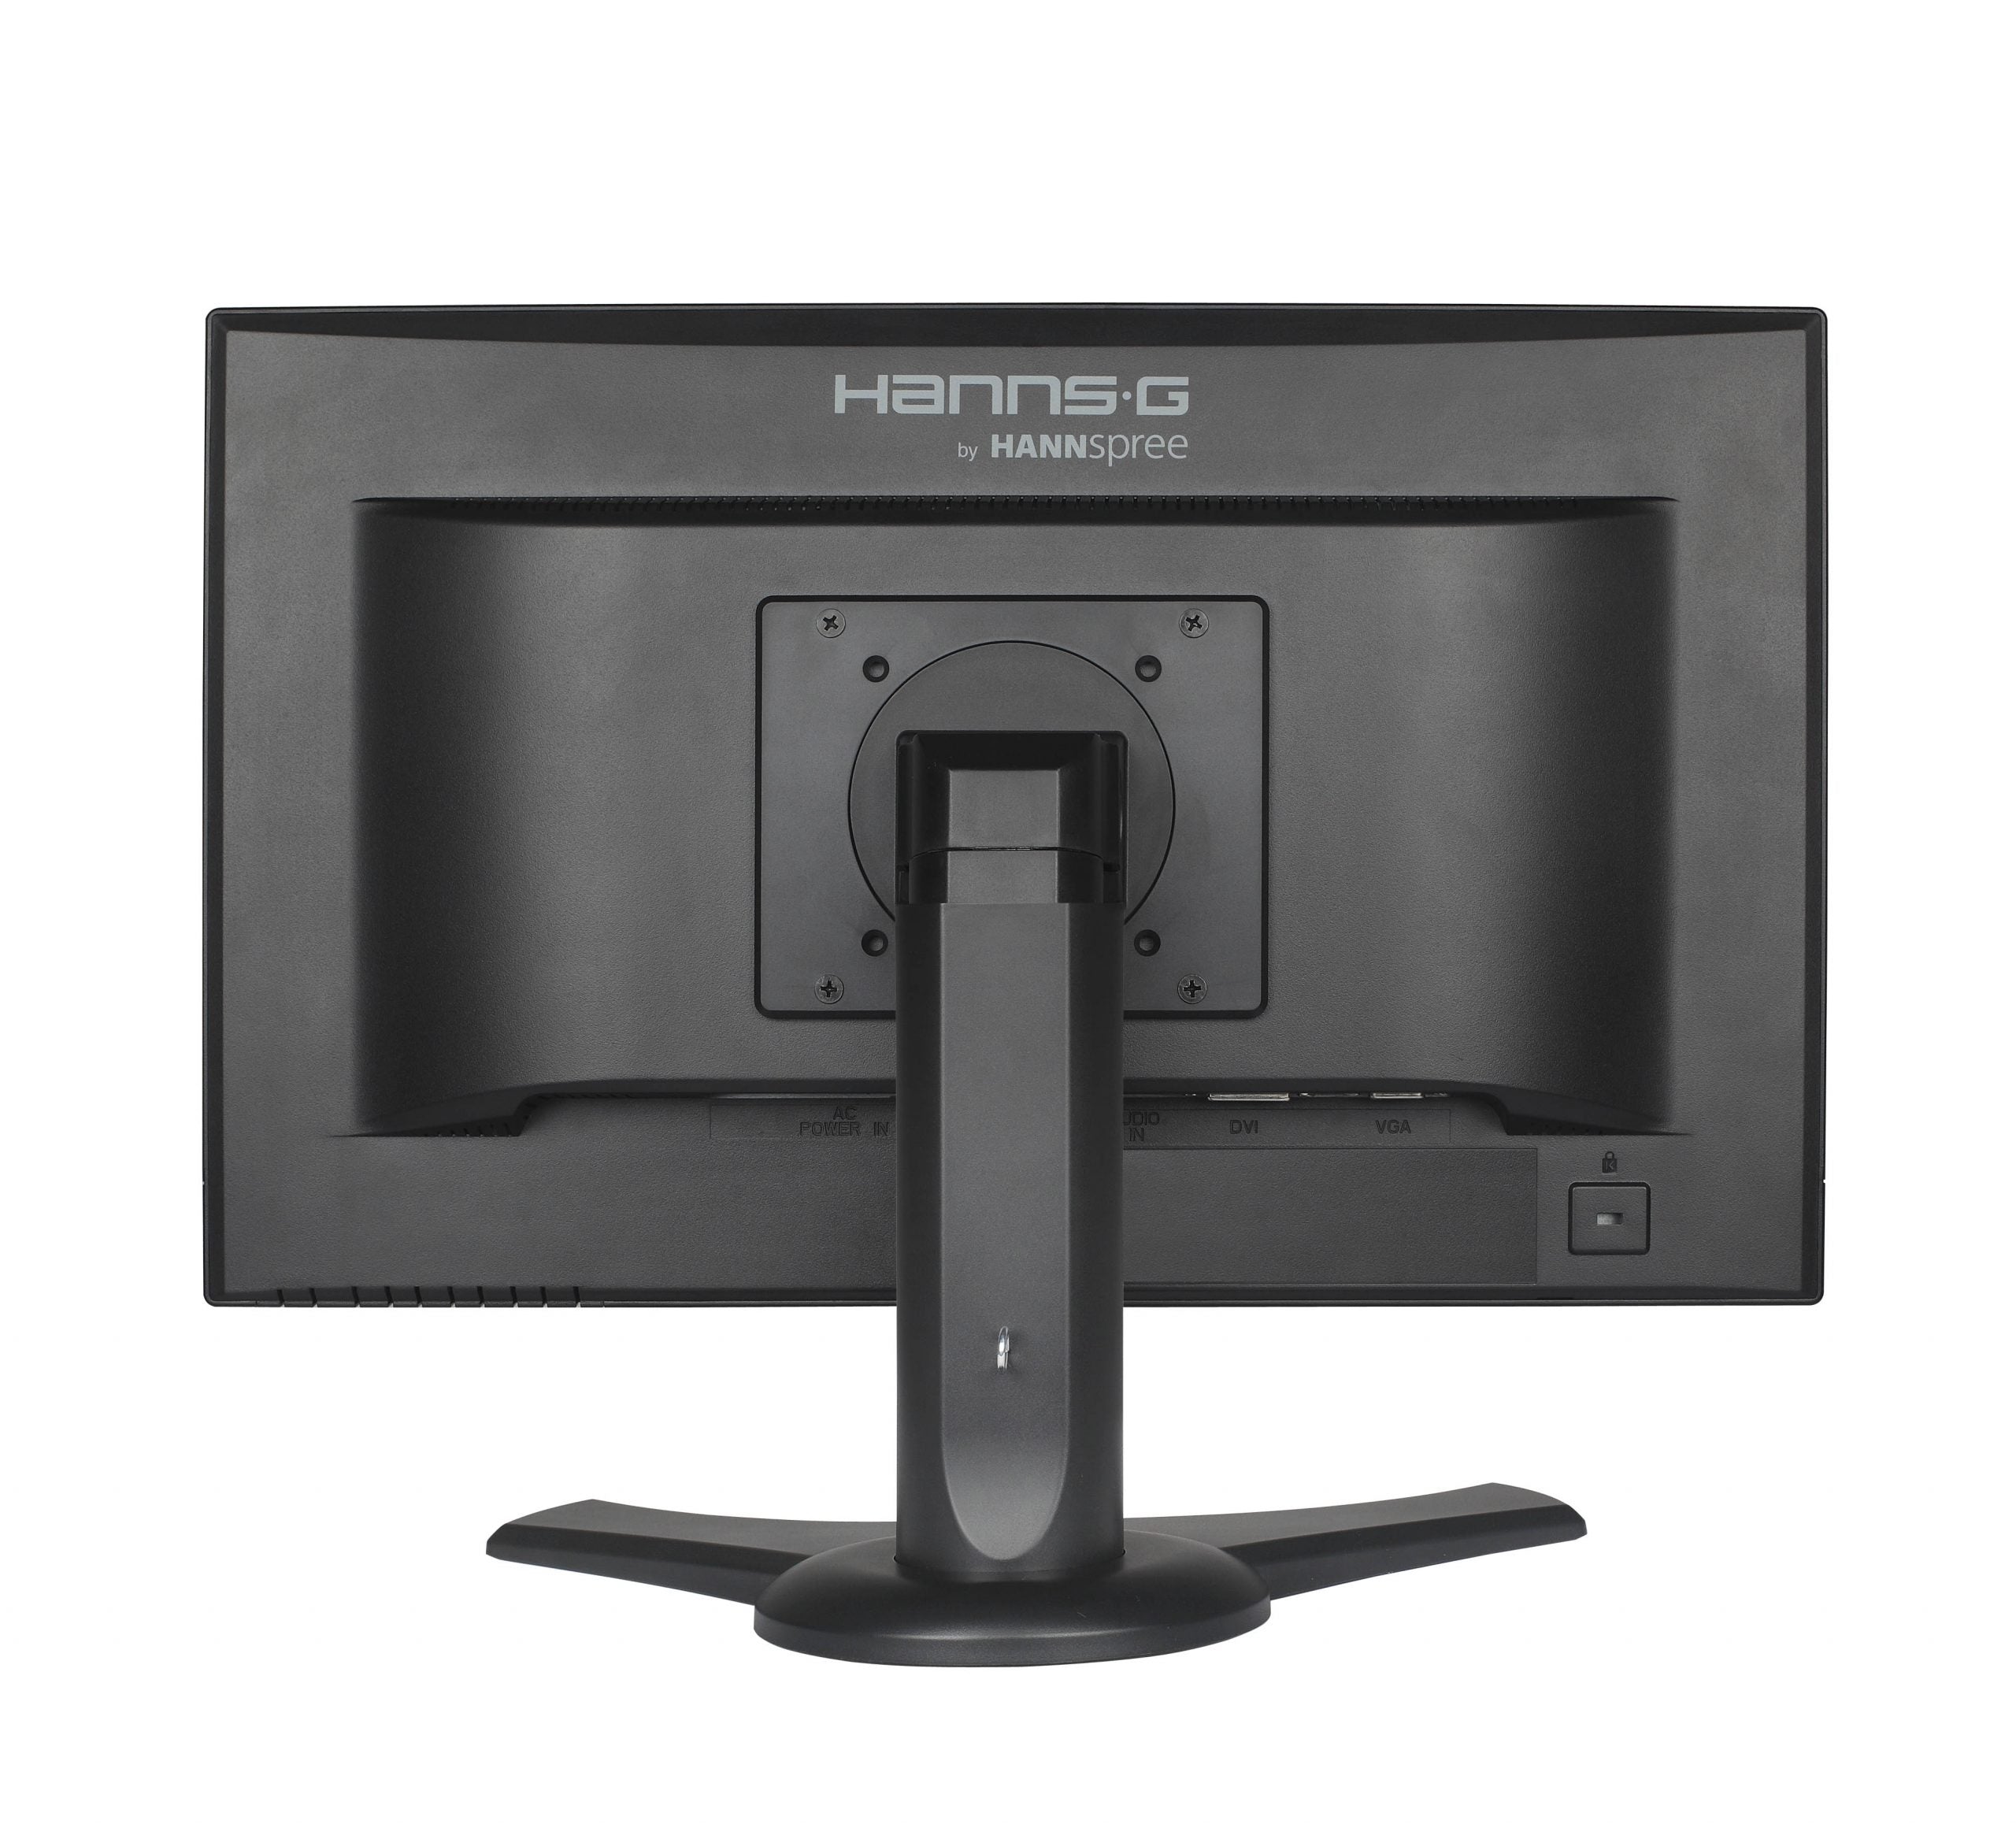 Hannspree Hanns.G HP 205 TFT LED LCD Monitor 20